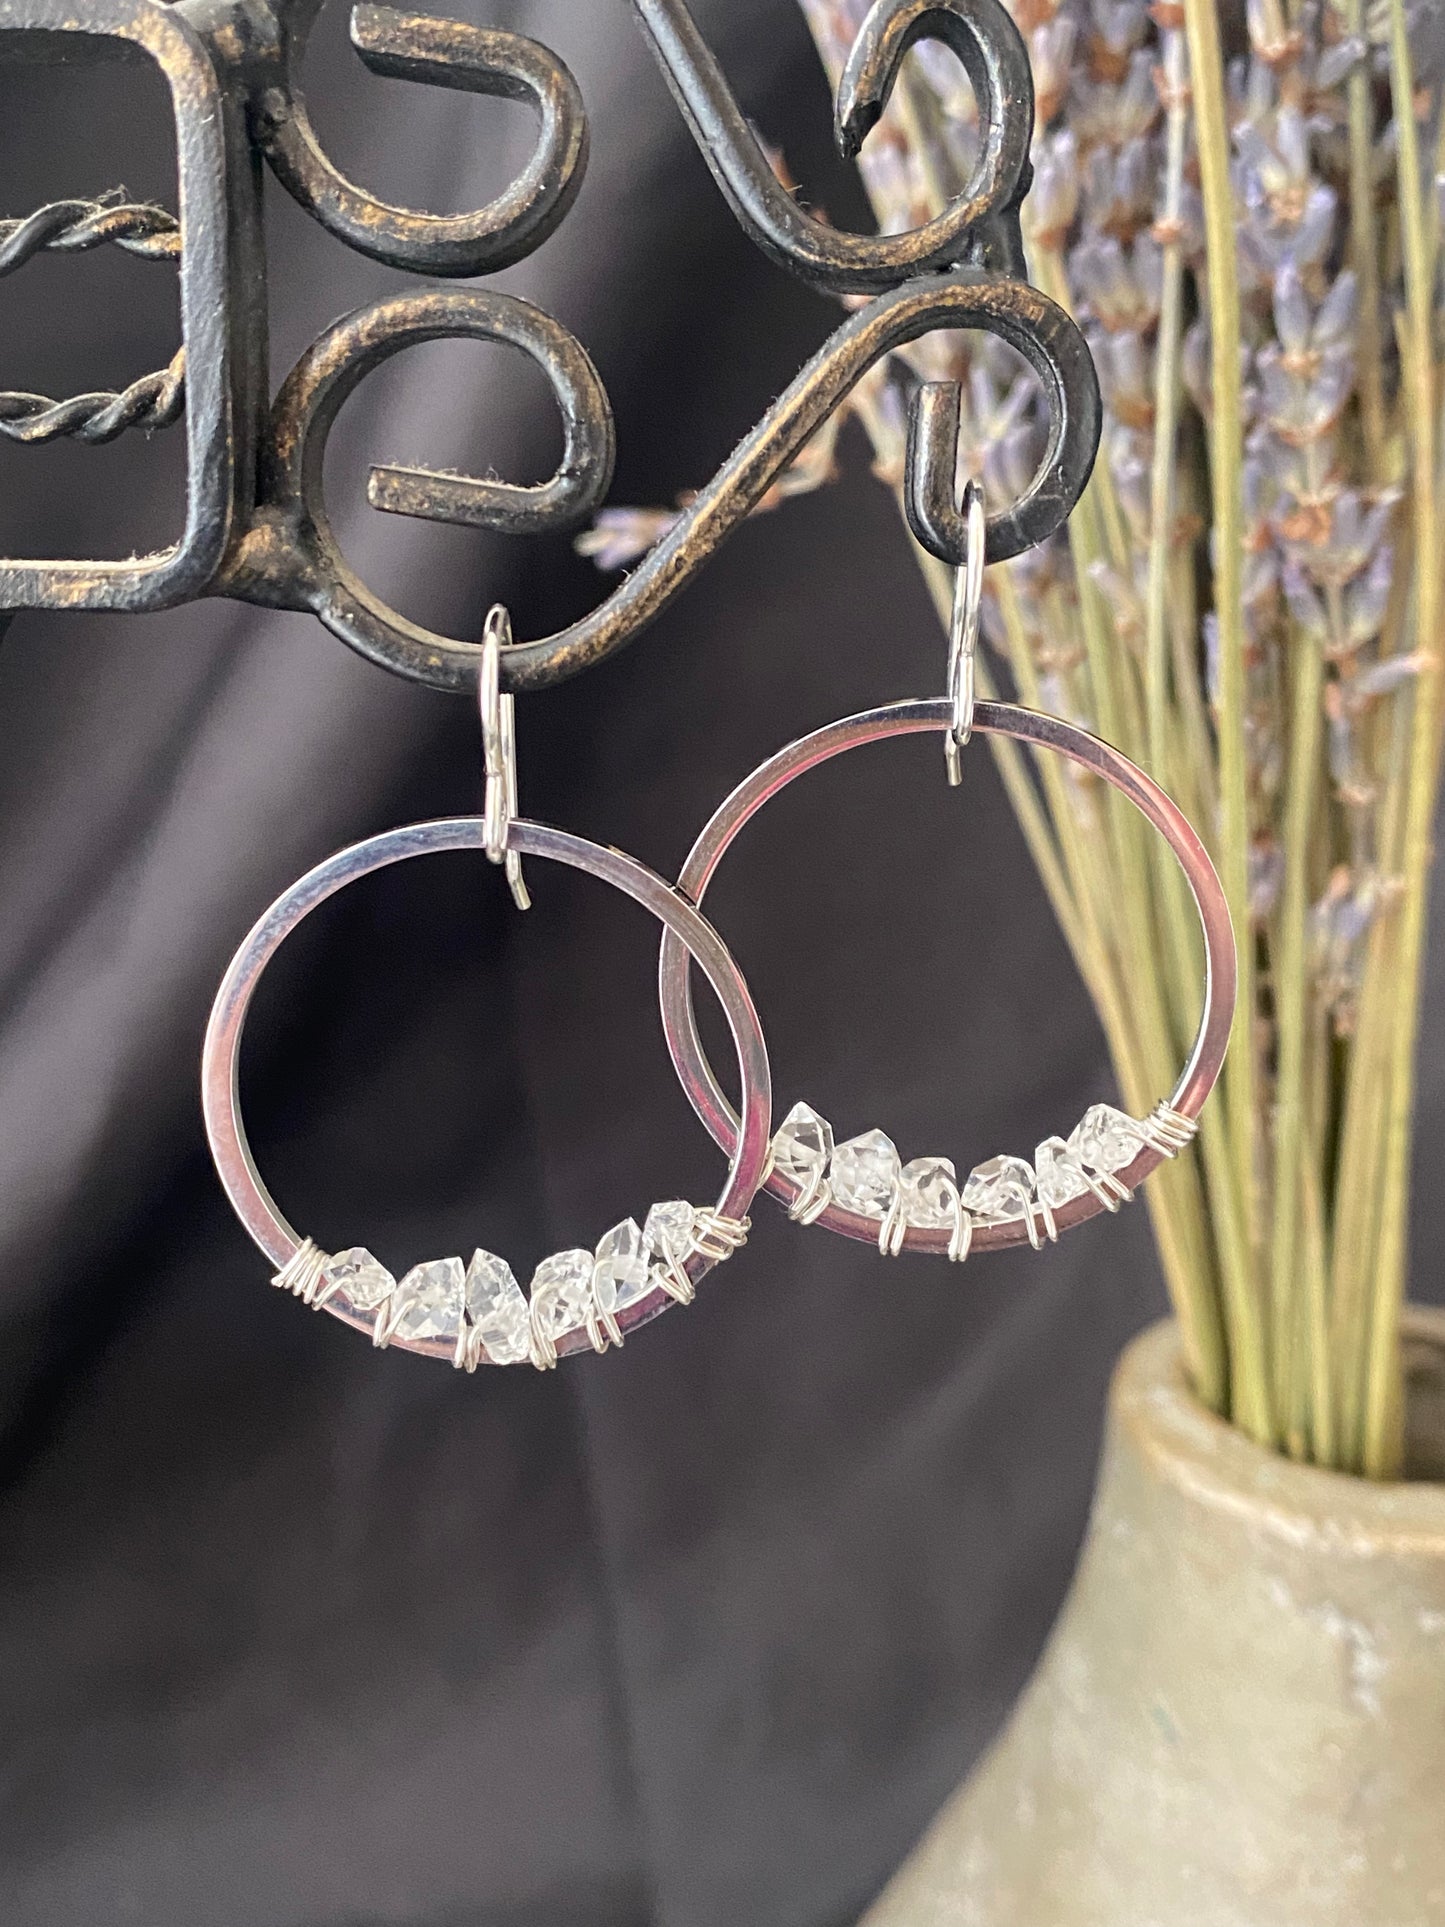 Herkimer diamonds, silver metal wire wrapped hoops, earrings